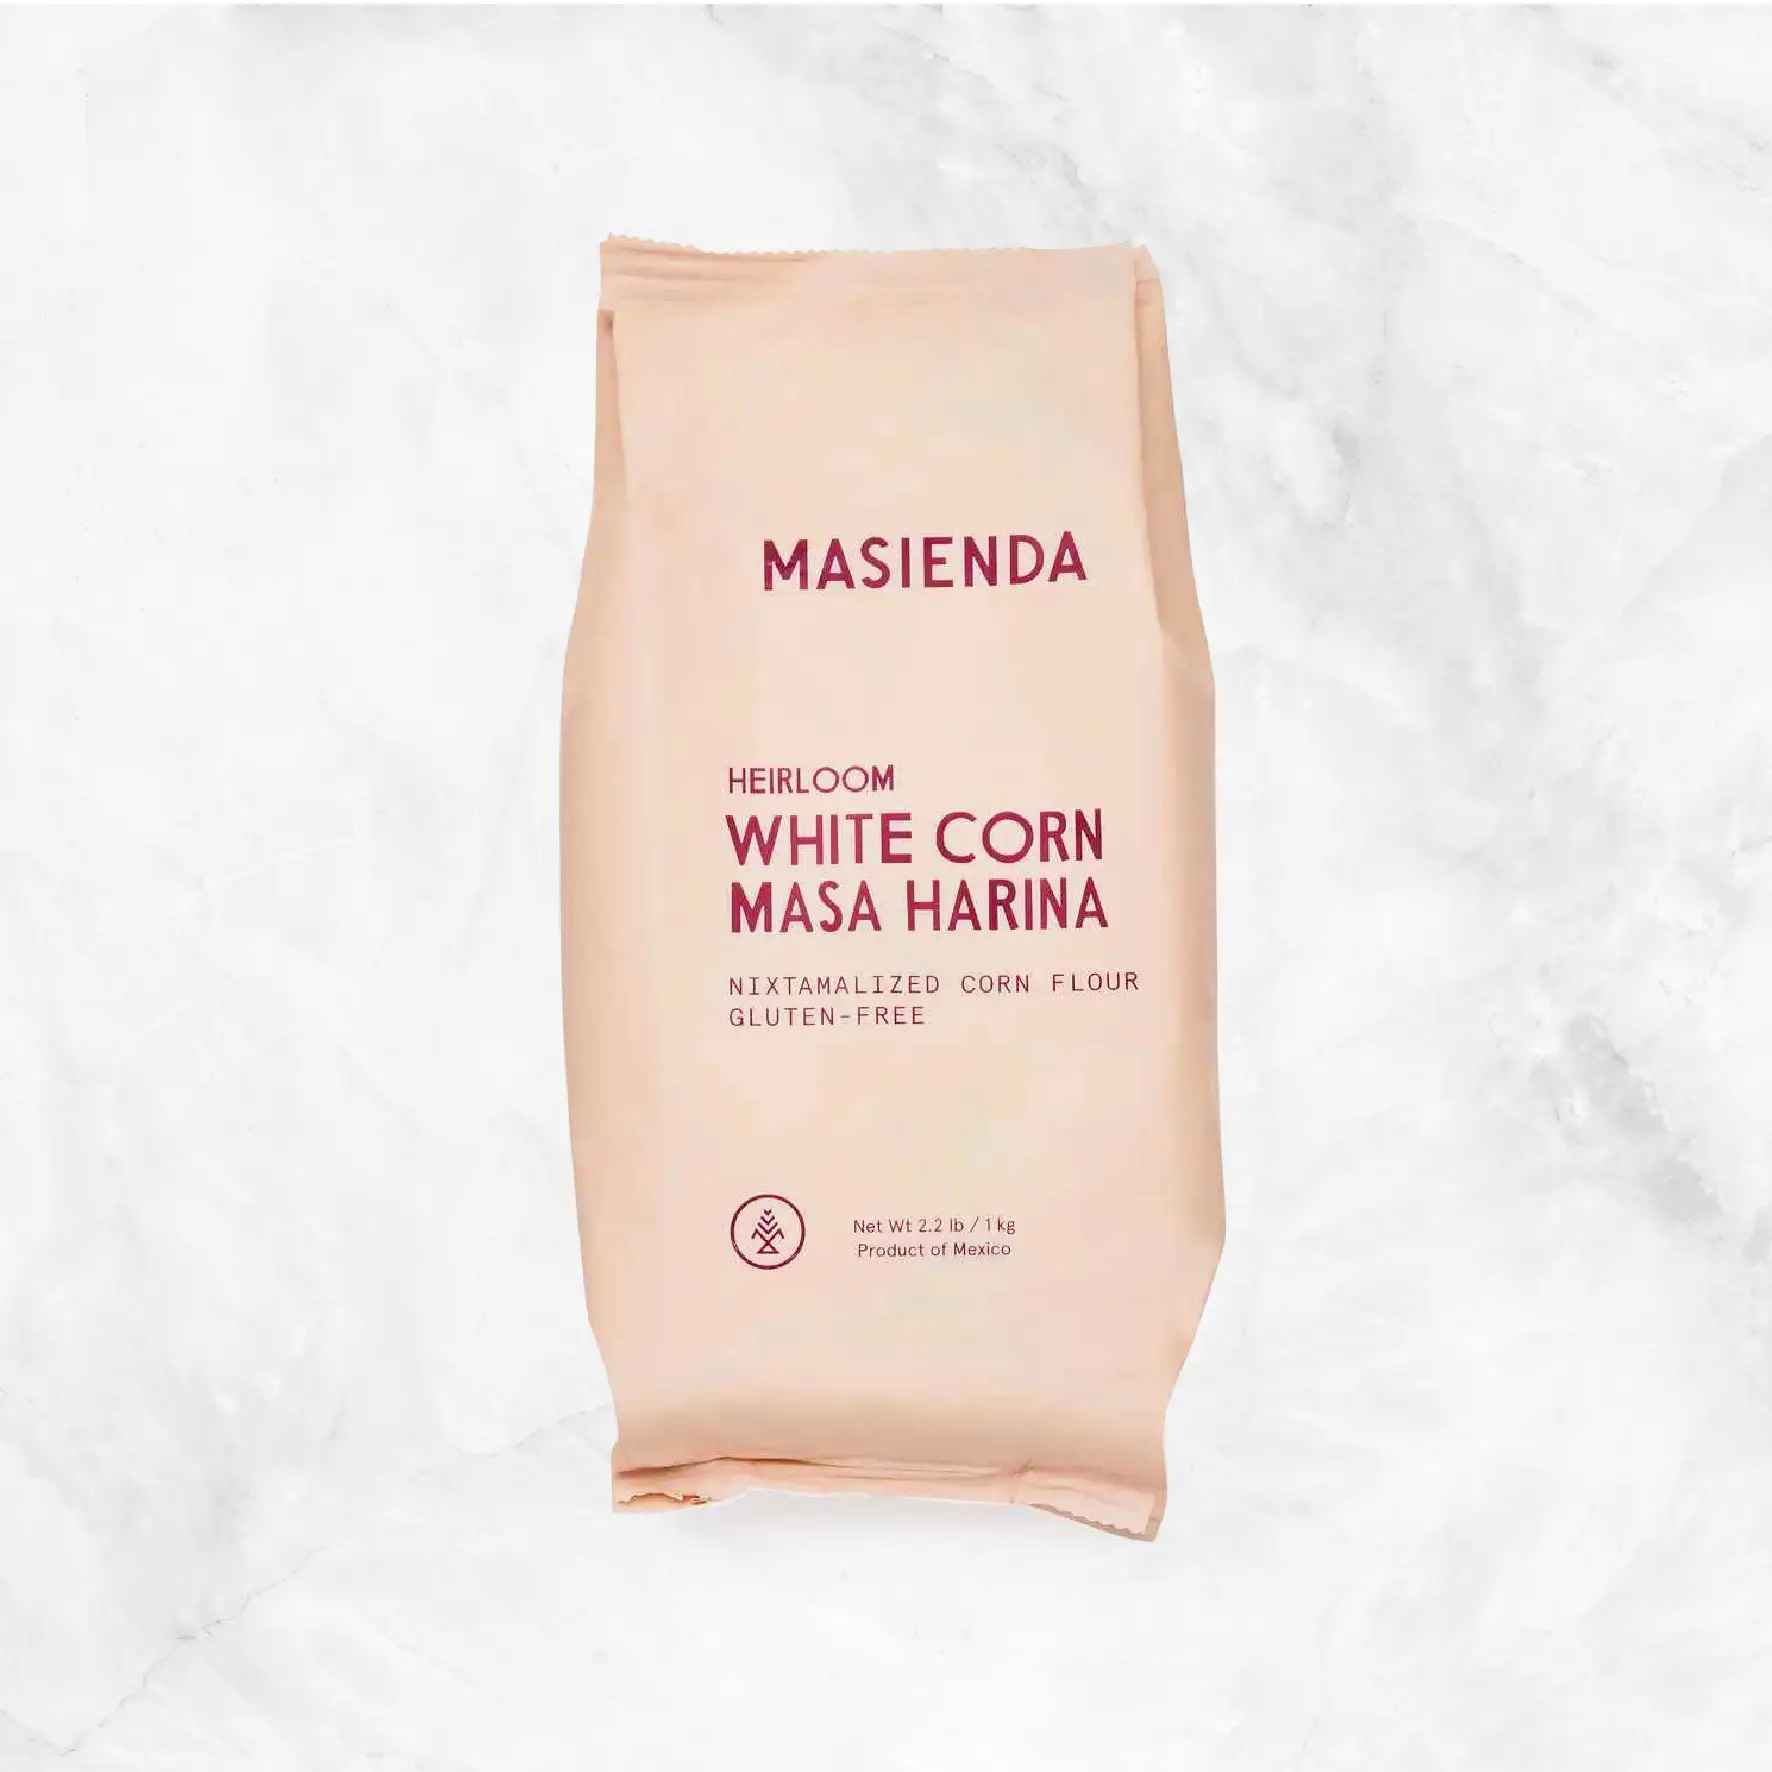 Heirloom White Corn Masa Harina Delivery